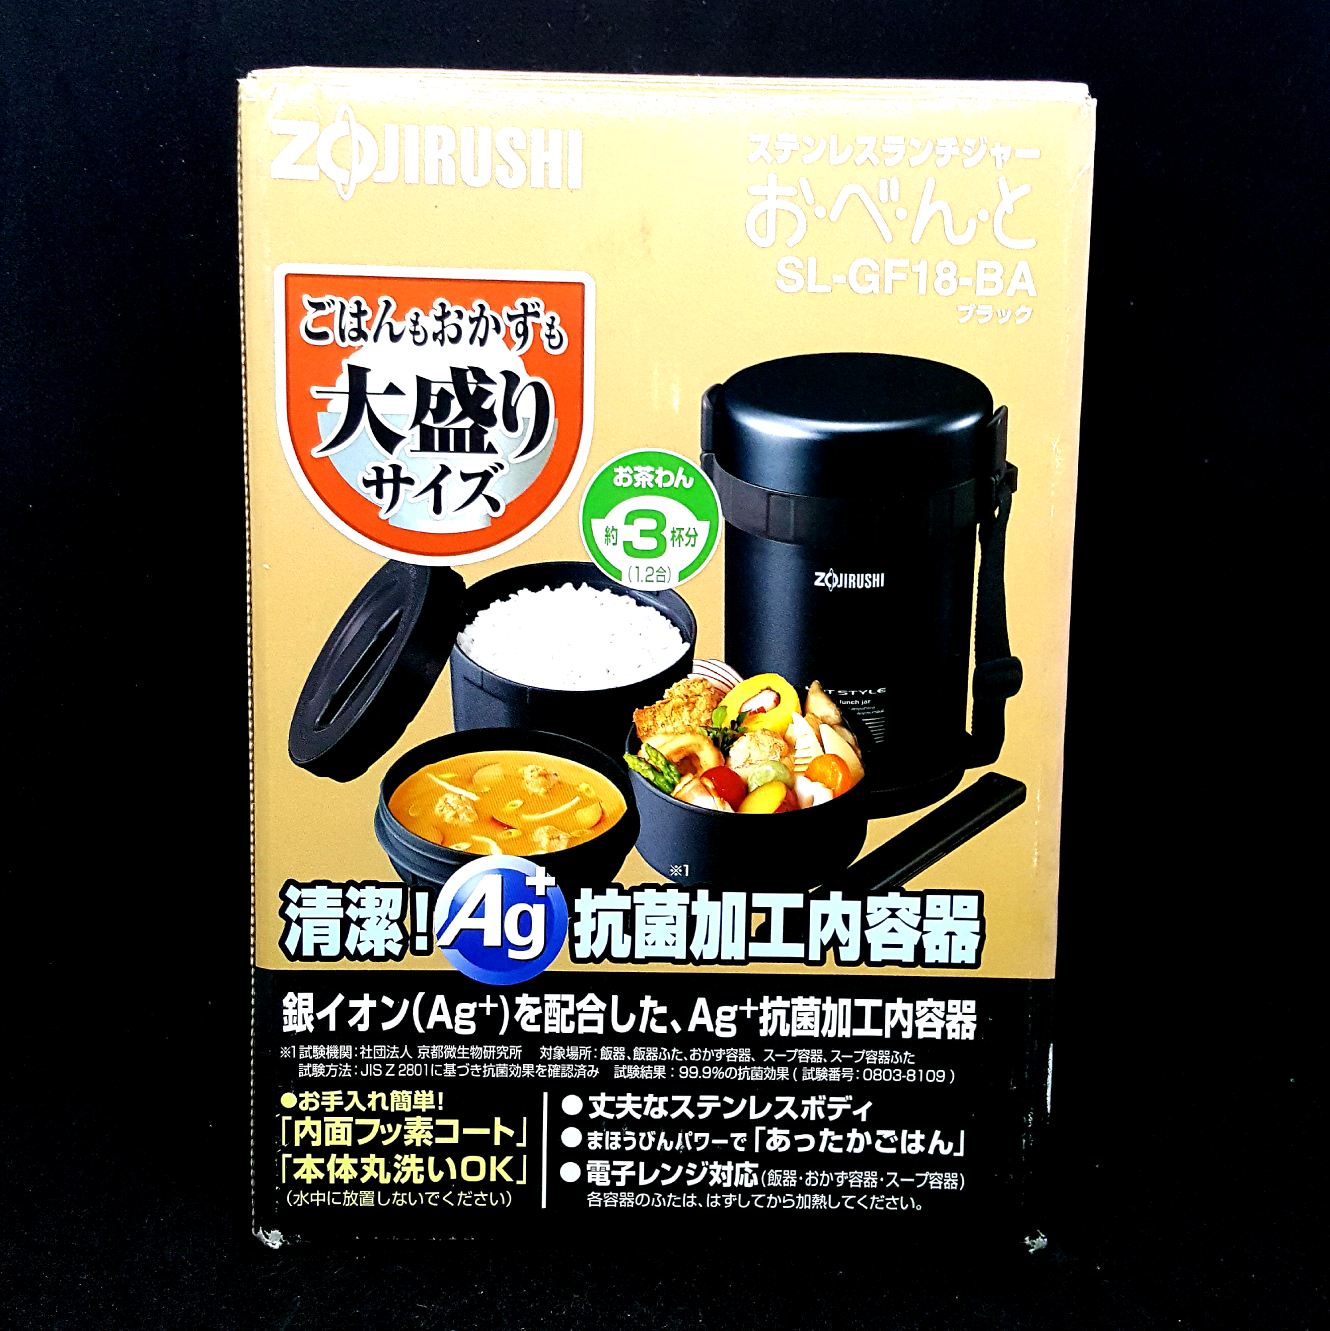  Zojirushi Thermal Stainless Lunch Box BENTO BAKO  SL-GF18-BA  Black (Japan Import): Zojirushi Lunch Jar: Home & Kitchen